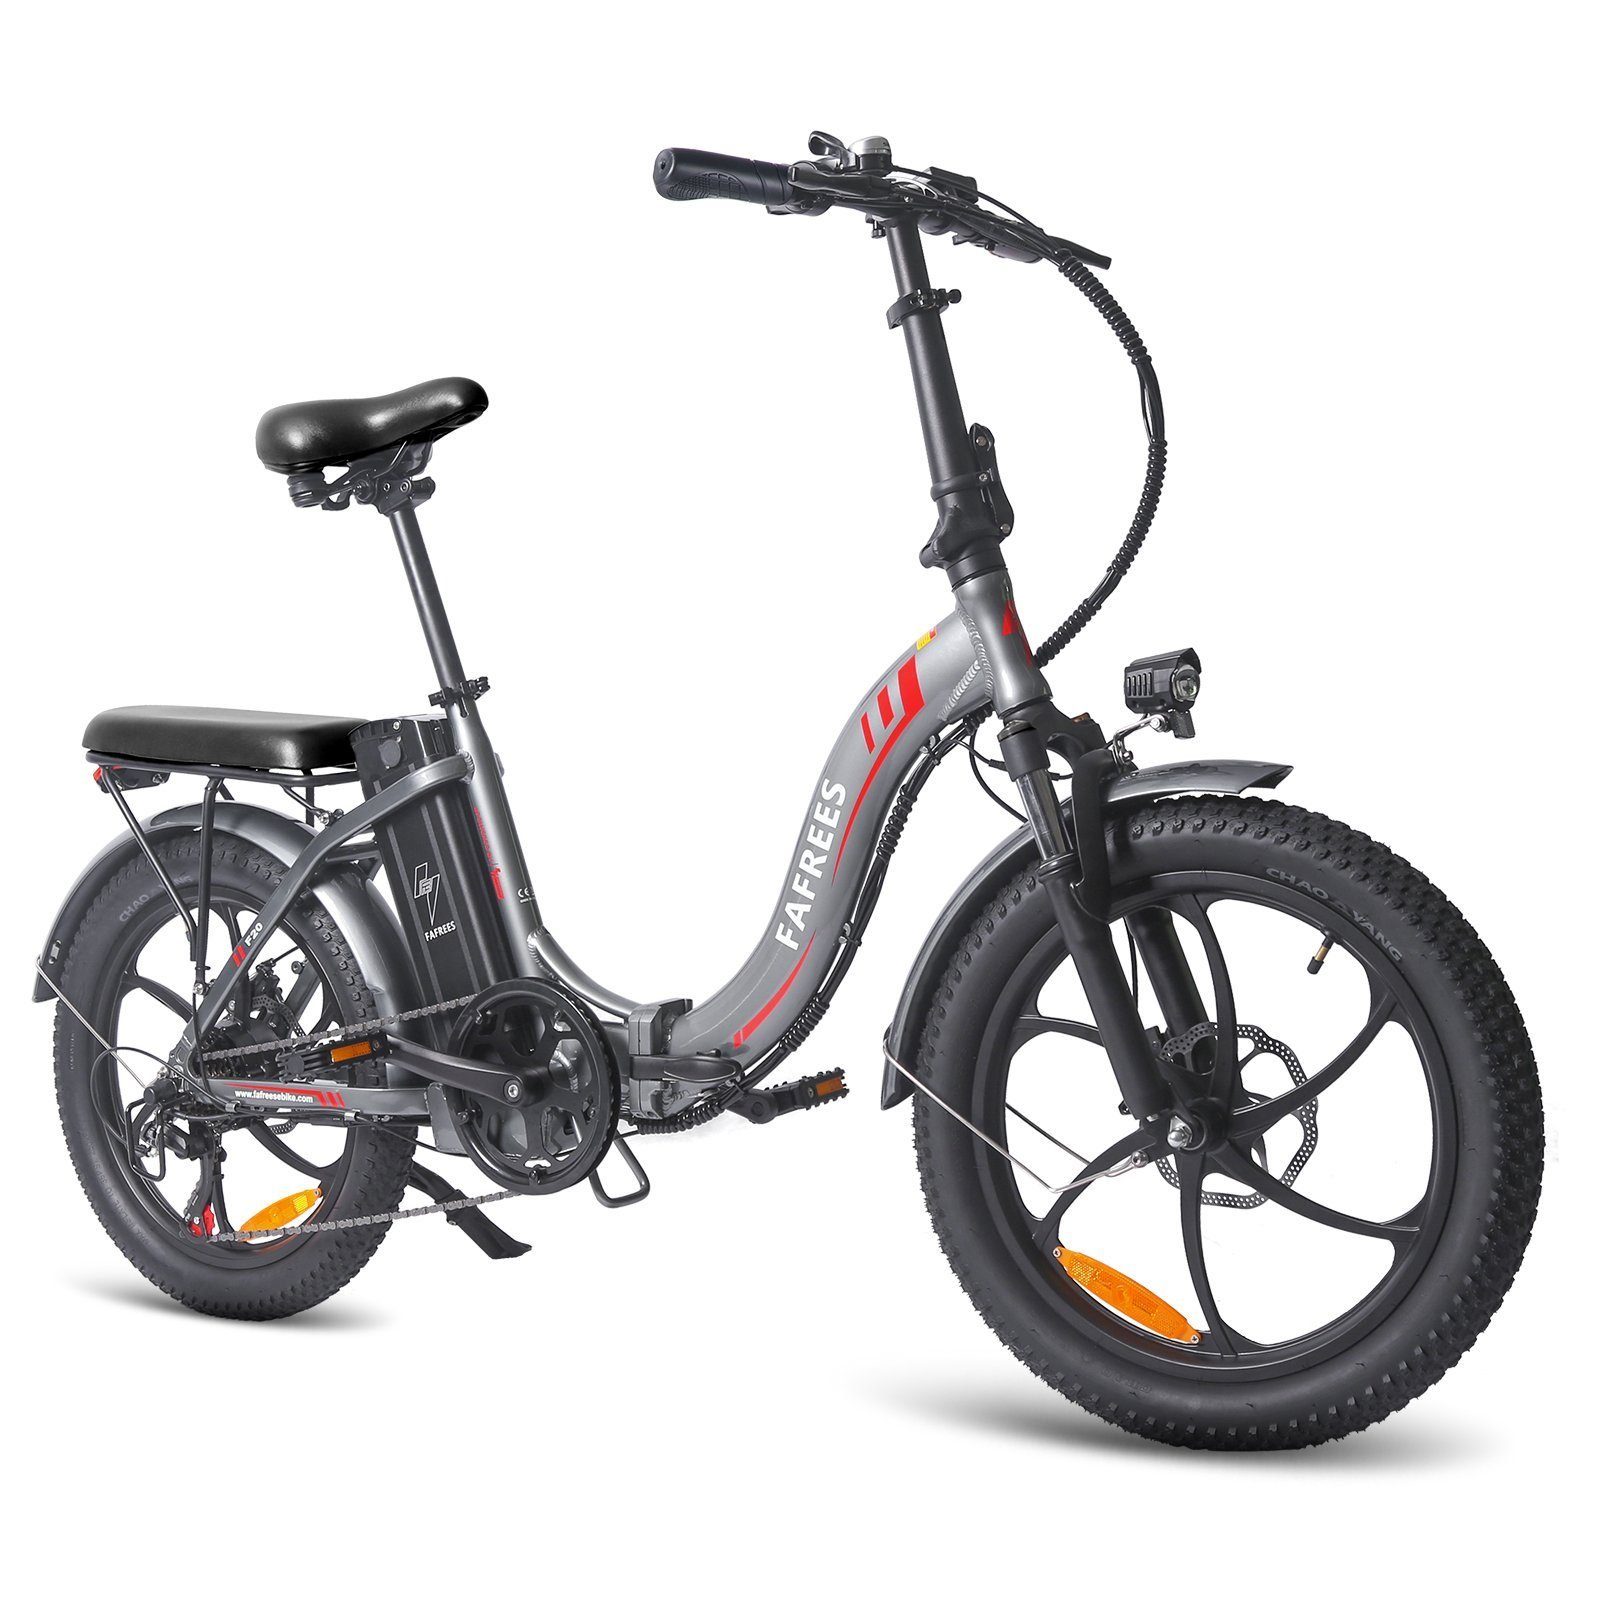 DOTMALL E-Bike fafrees E-Bike F20, klapprad mit LCD-Display,Heckmotor, bis 130kg